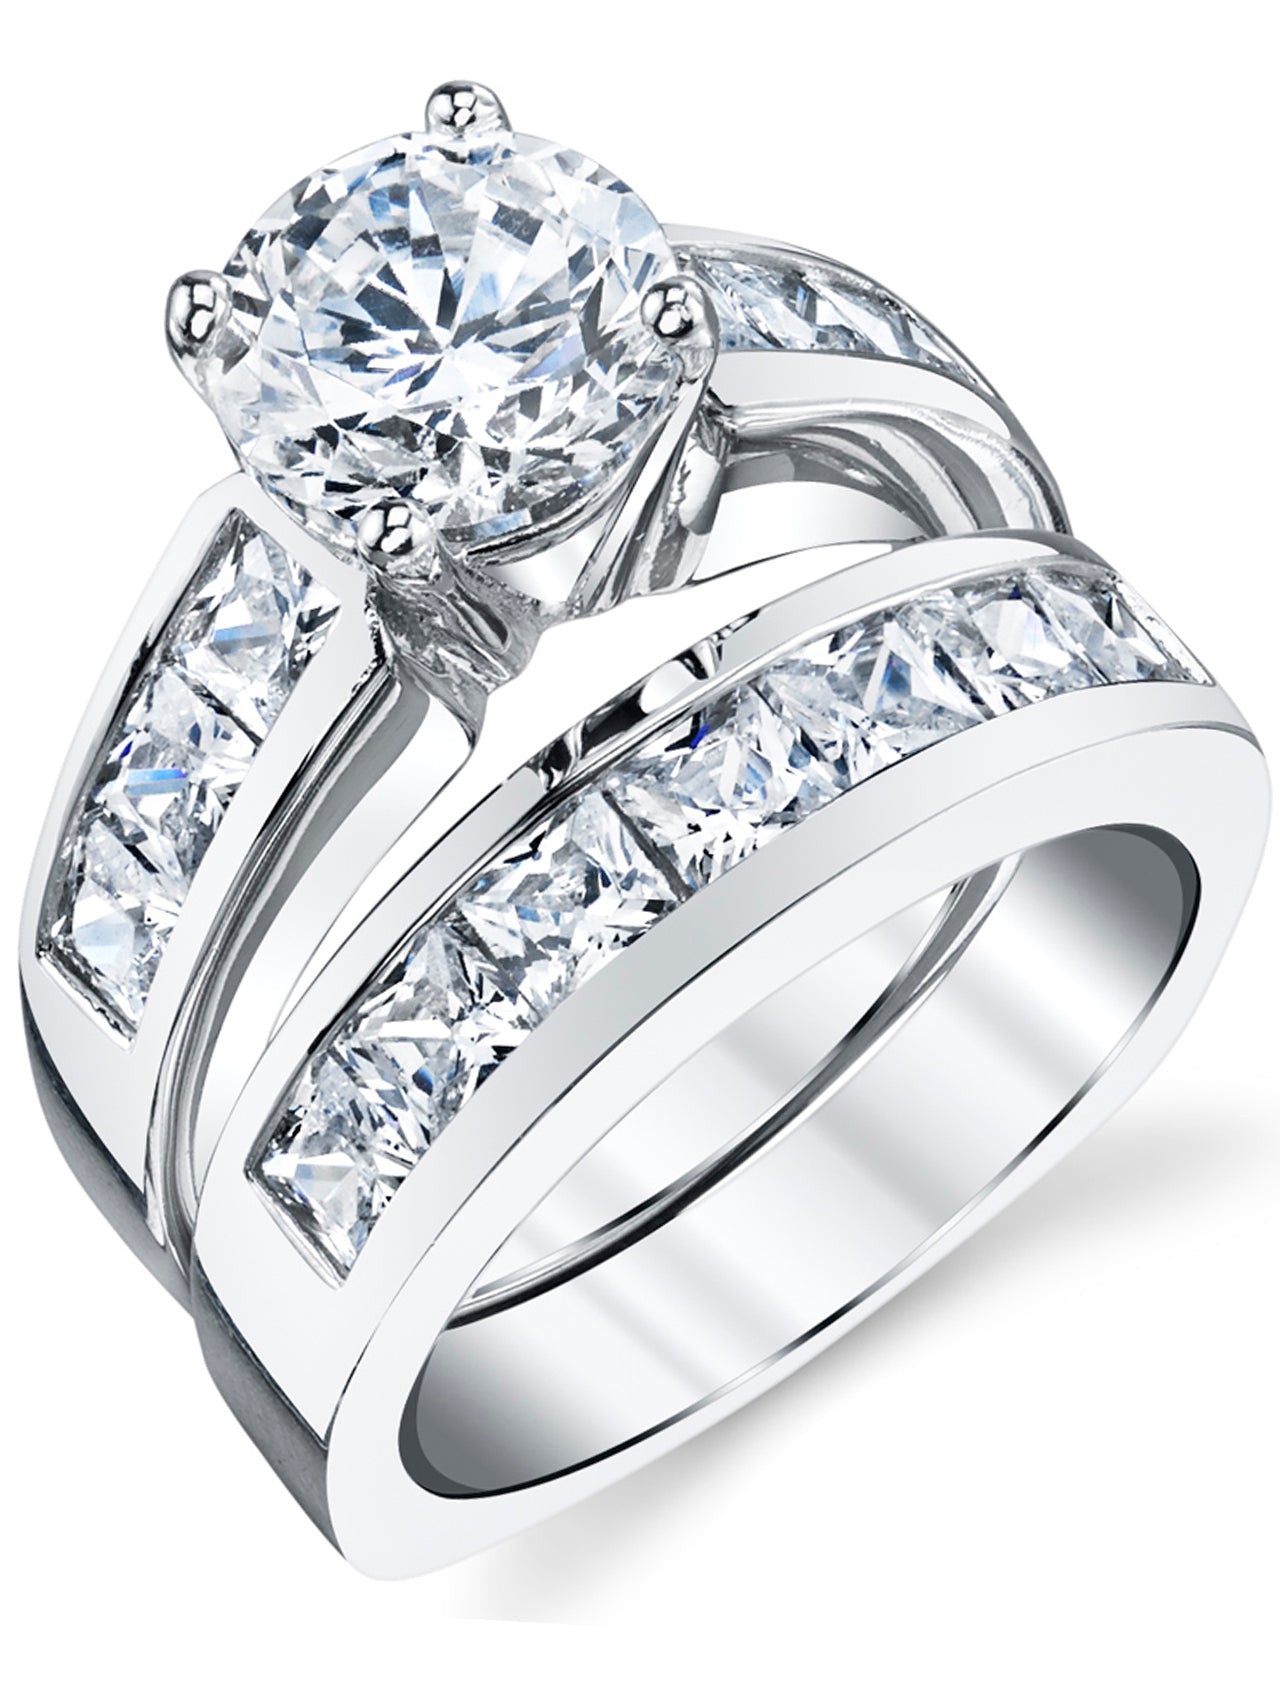 SUNLIAT Women's Princess Cut Cubic Zirconia Engagement Ring Set